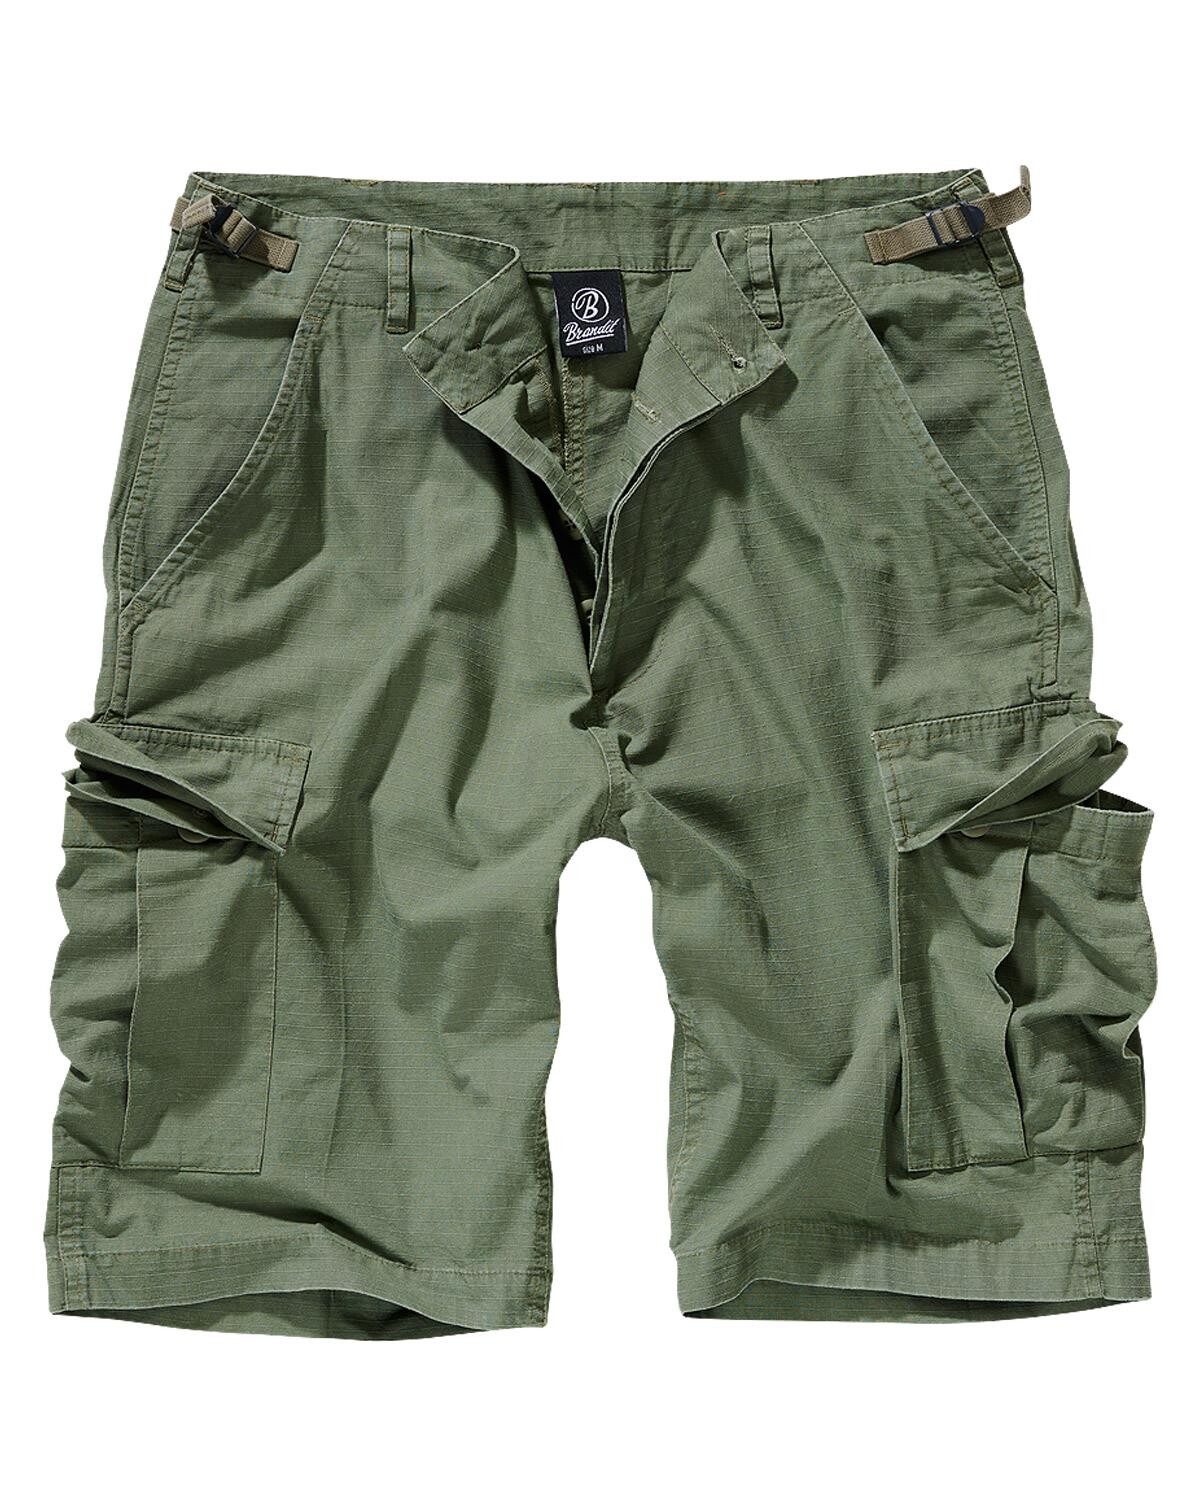 Brandit BDU Ripstop Shorts (Oliven, S)